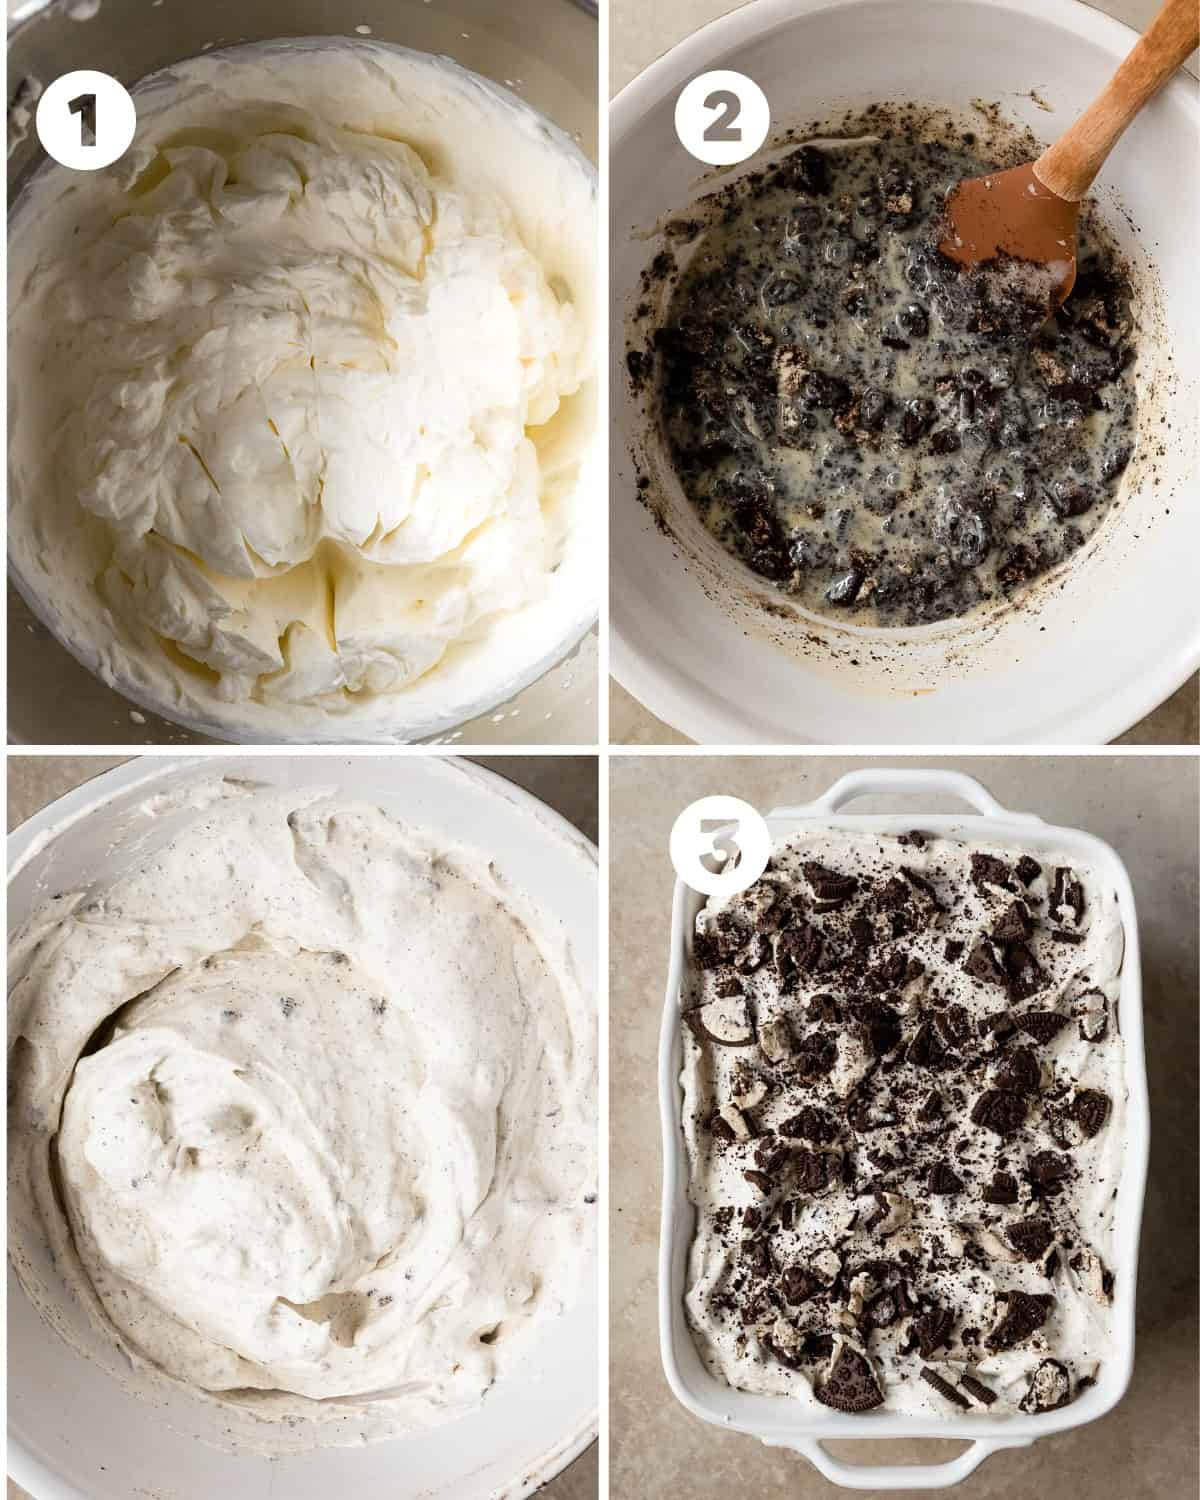 Cookies and Cream Ice Cream